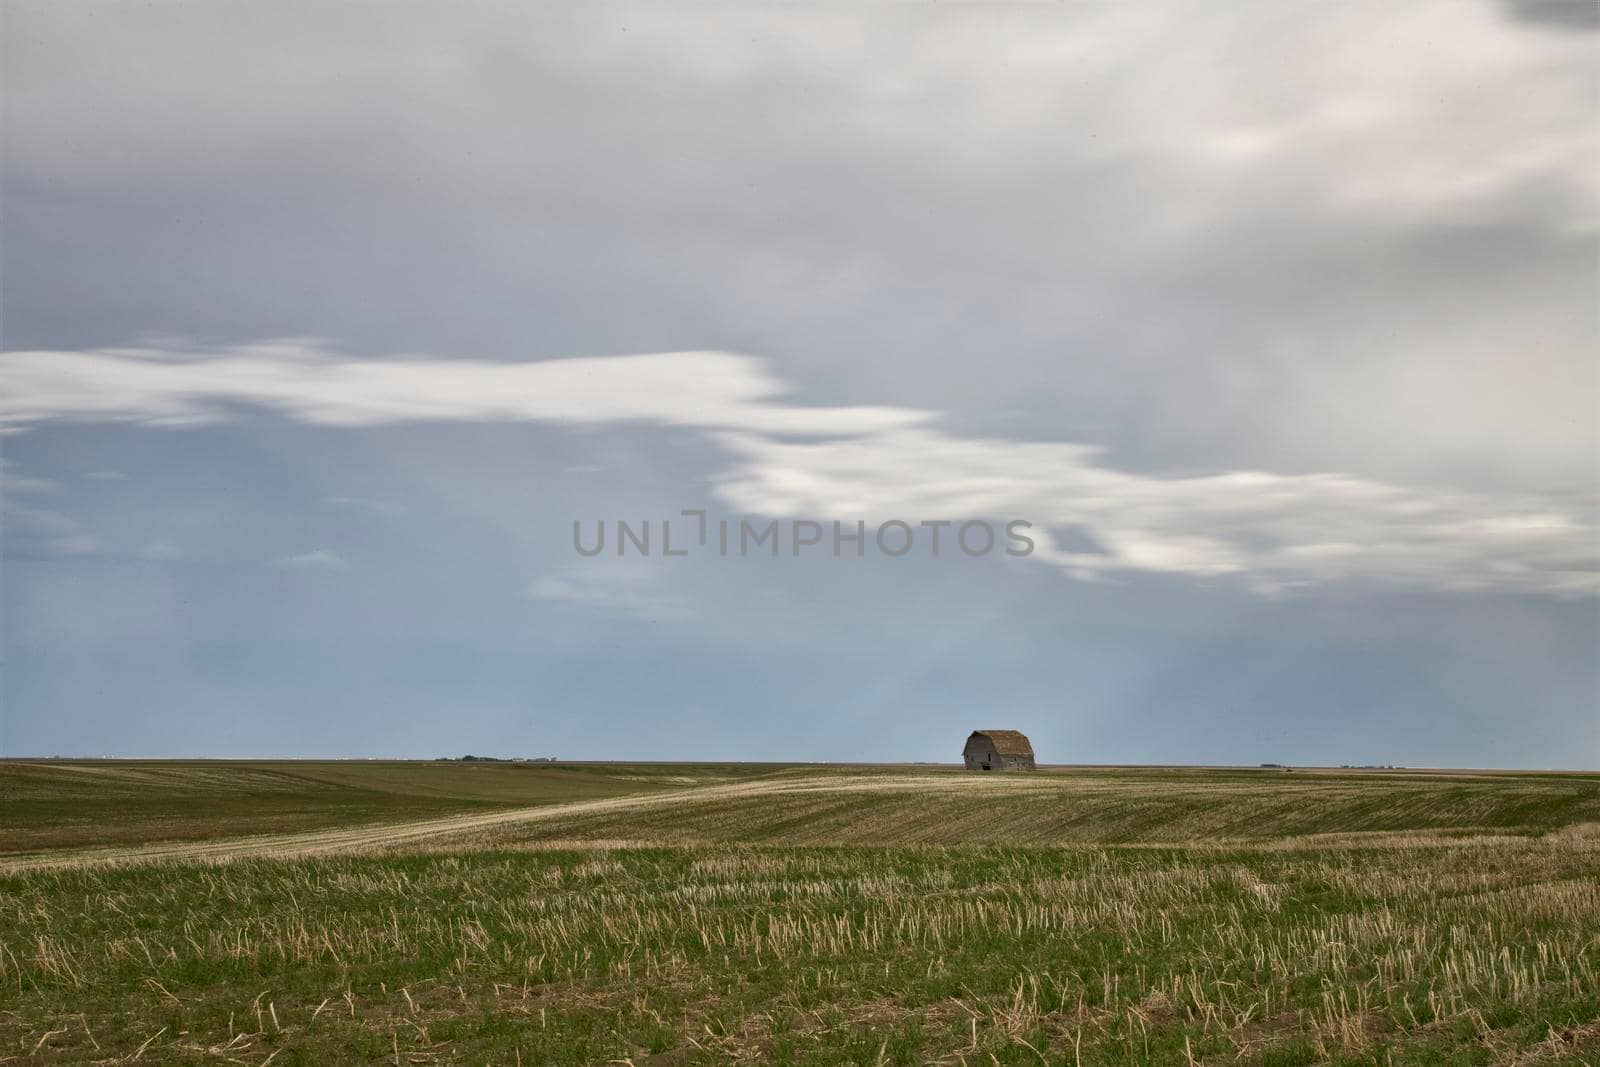 Prairie Storm Clouds in Saskatchewan Canada Rural